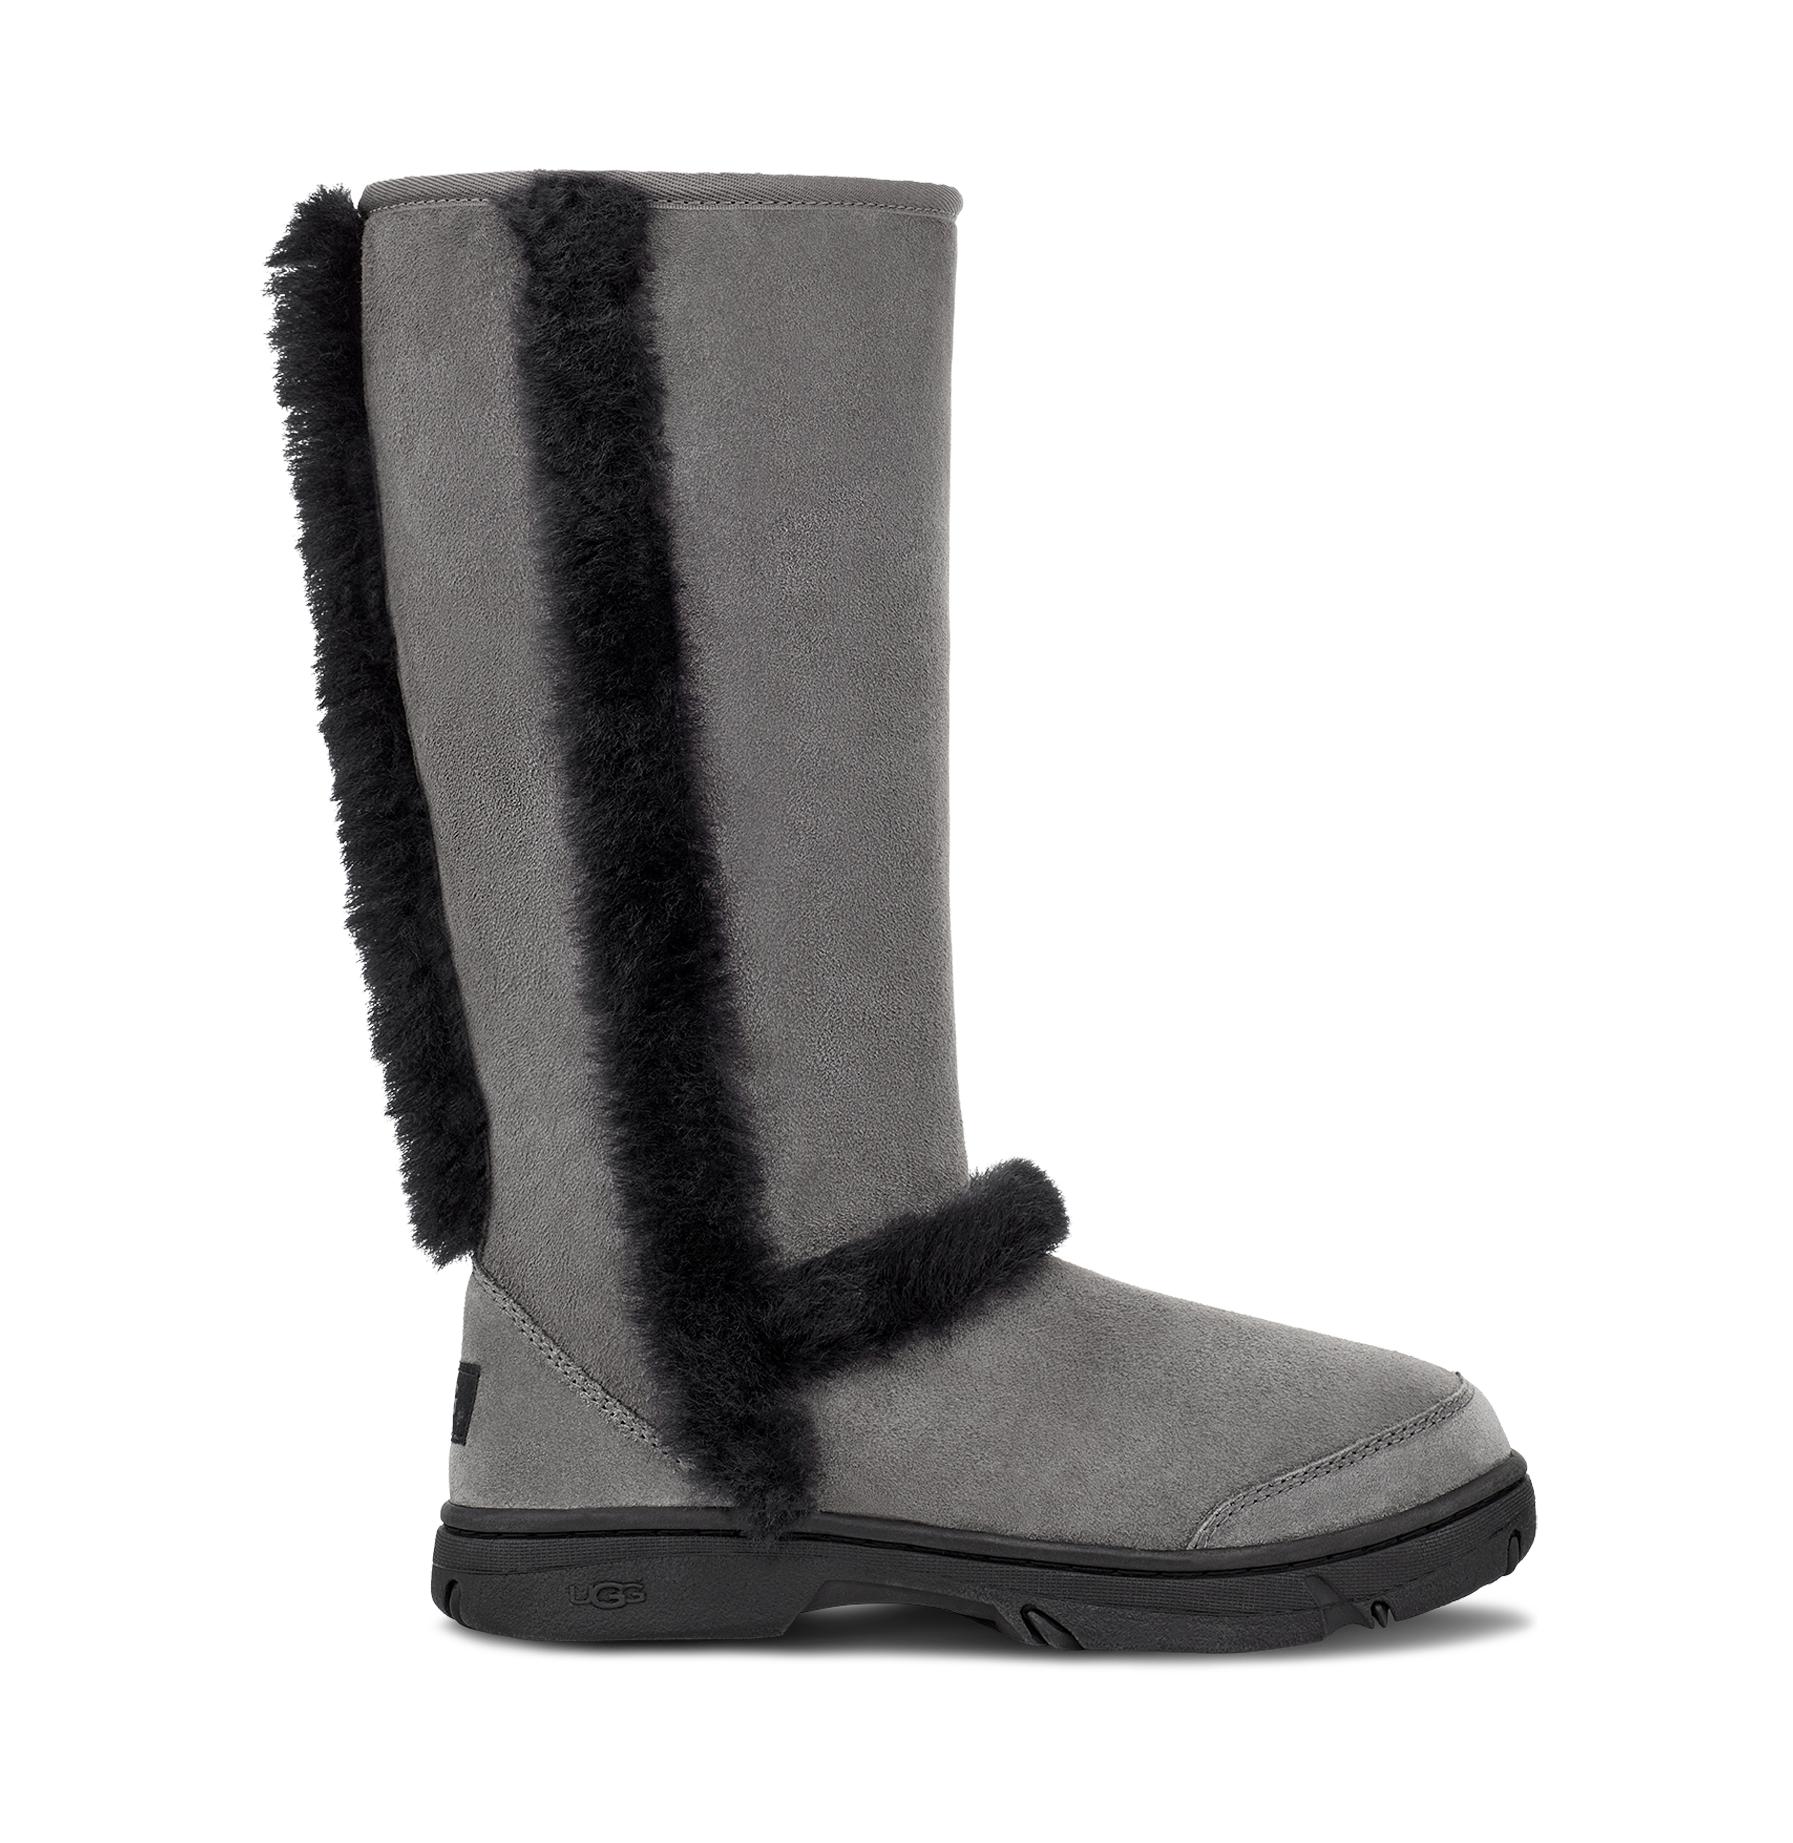 UGG Suede Sunburst Tall Warm Sheepskin Boots in Grey/Black (Black) - Lyst